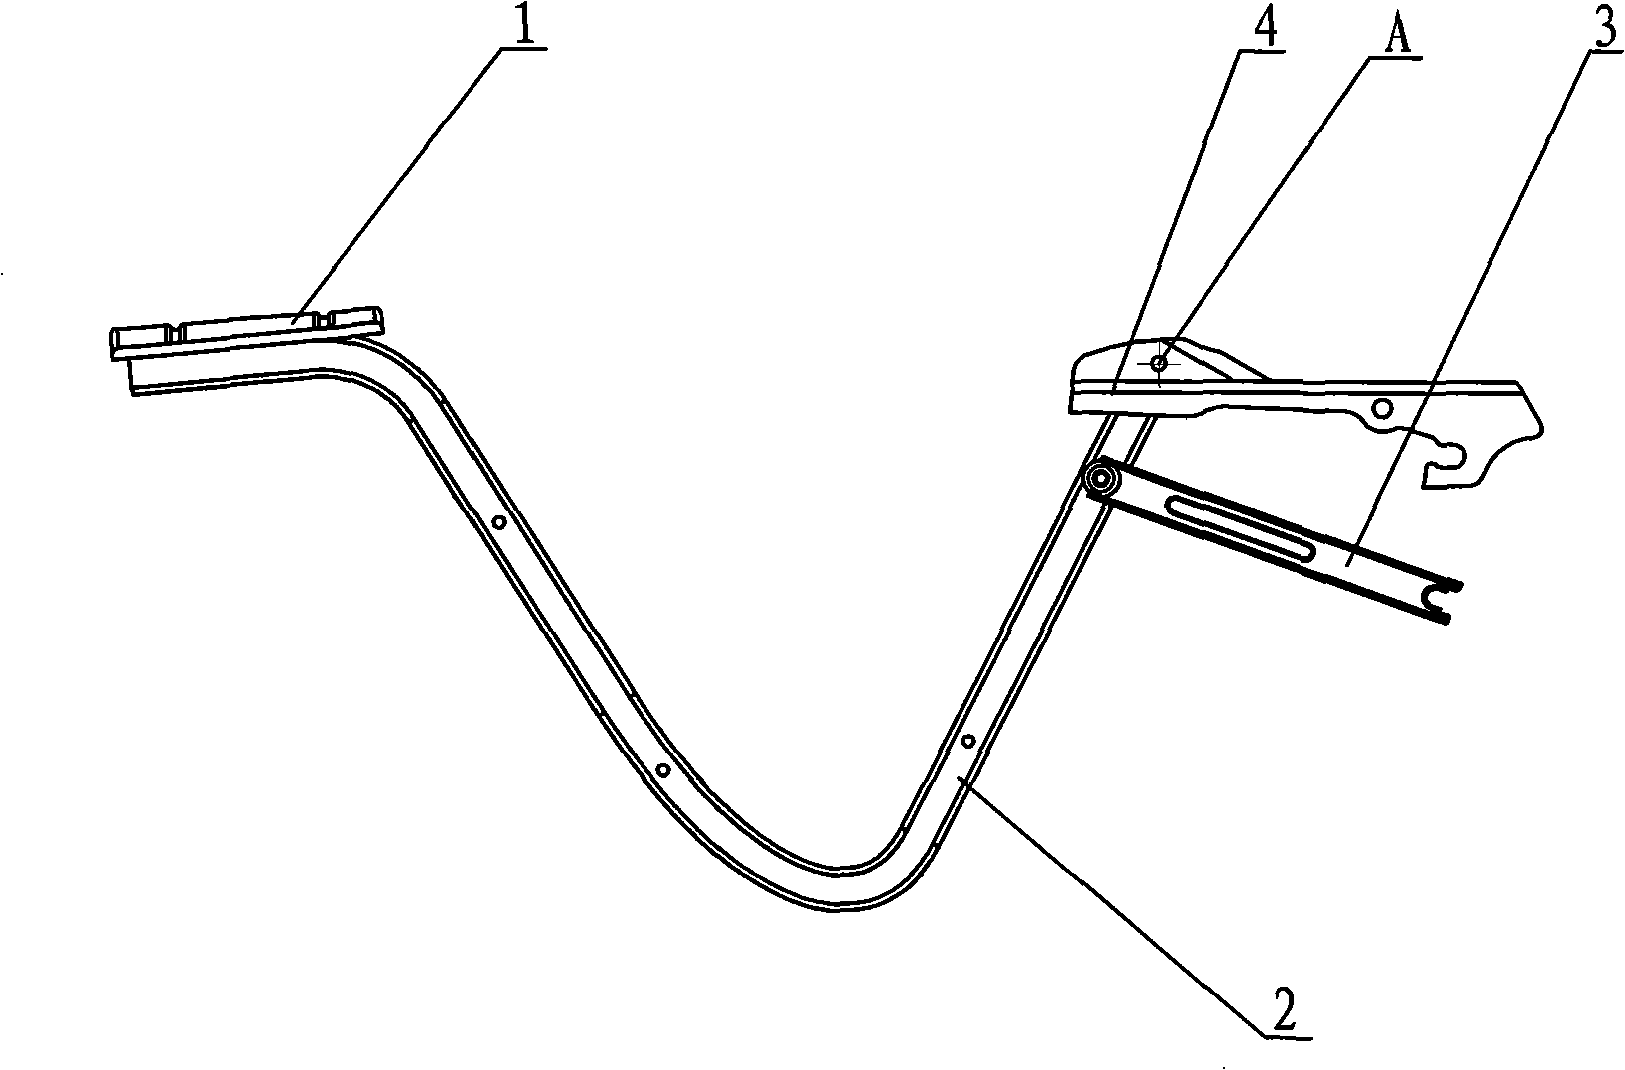 Automobile luggage case link connection mechanism